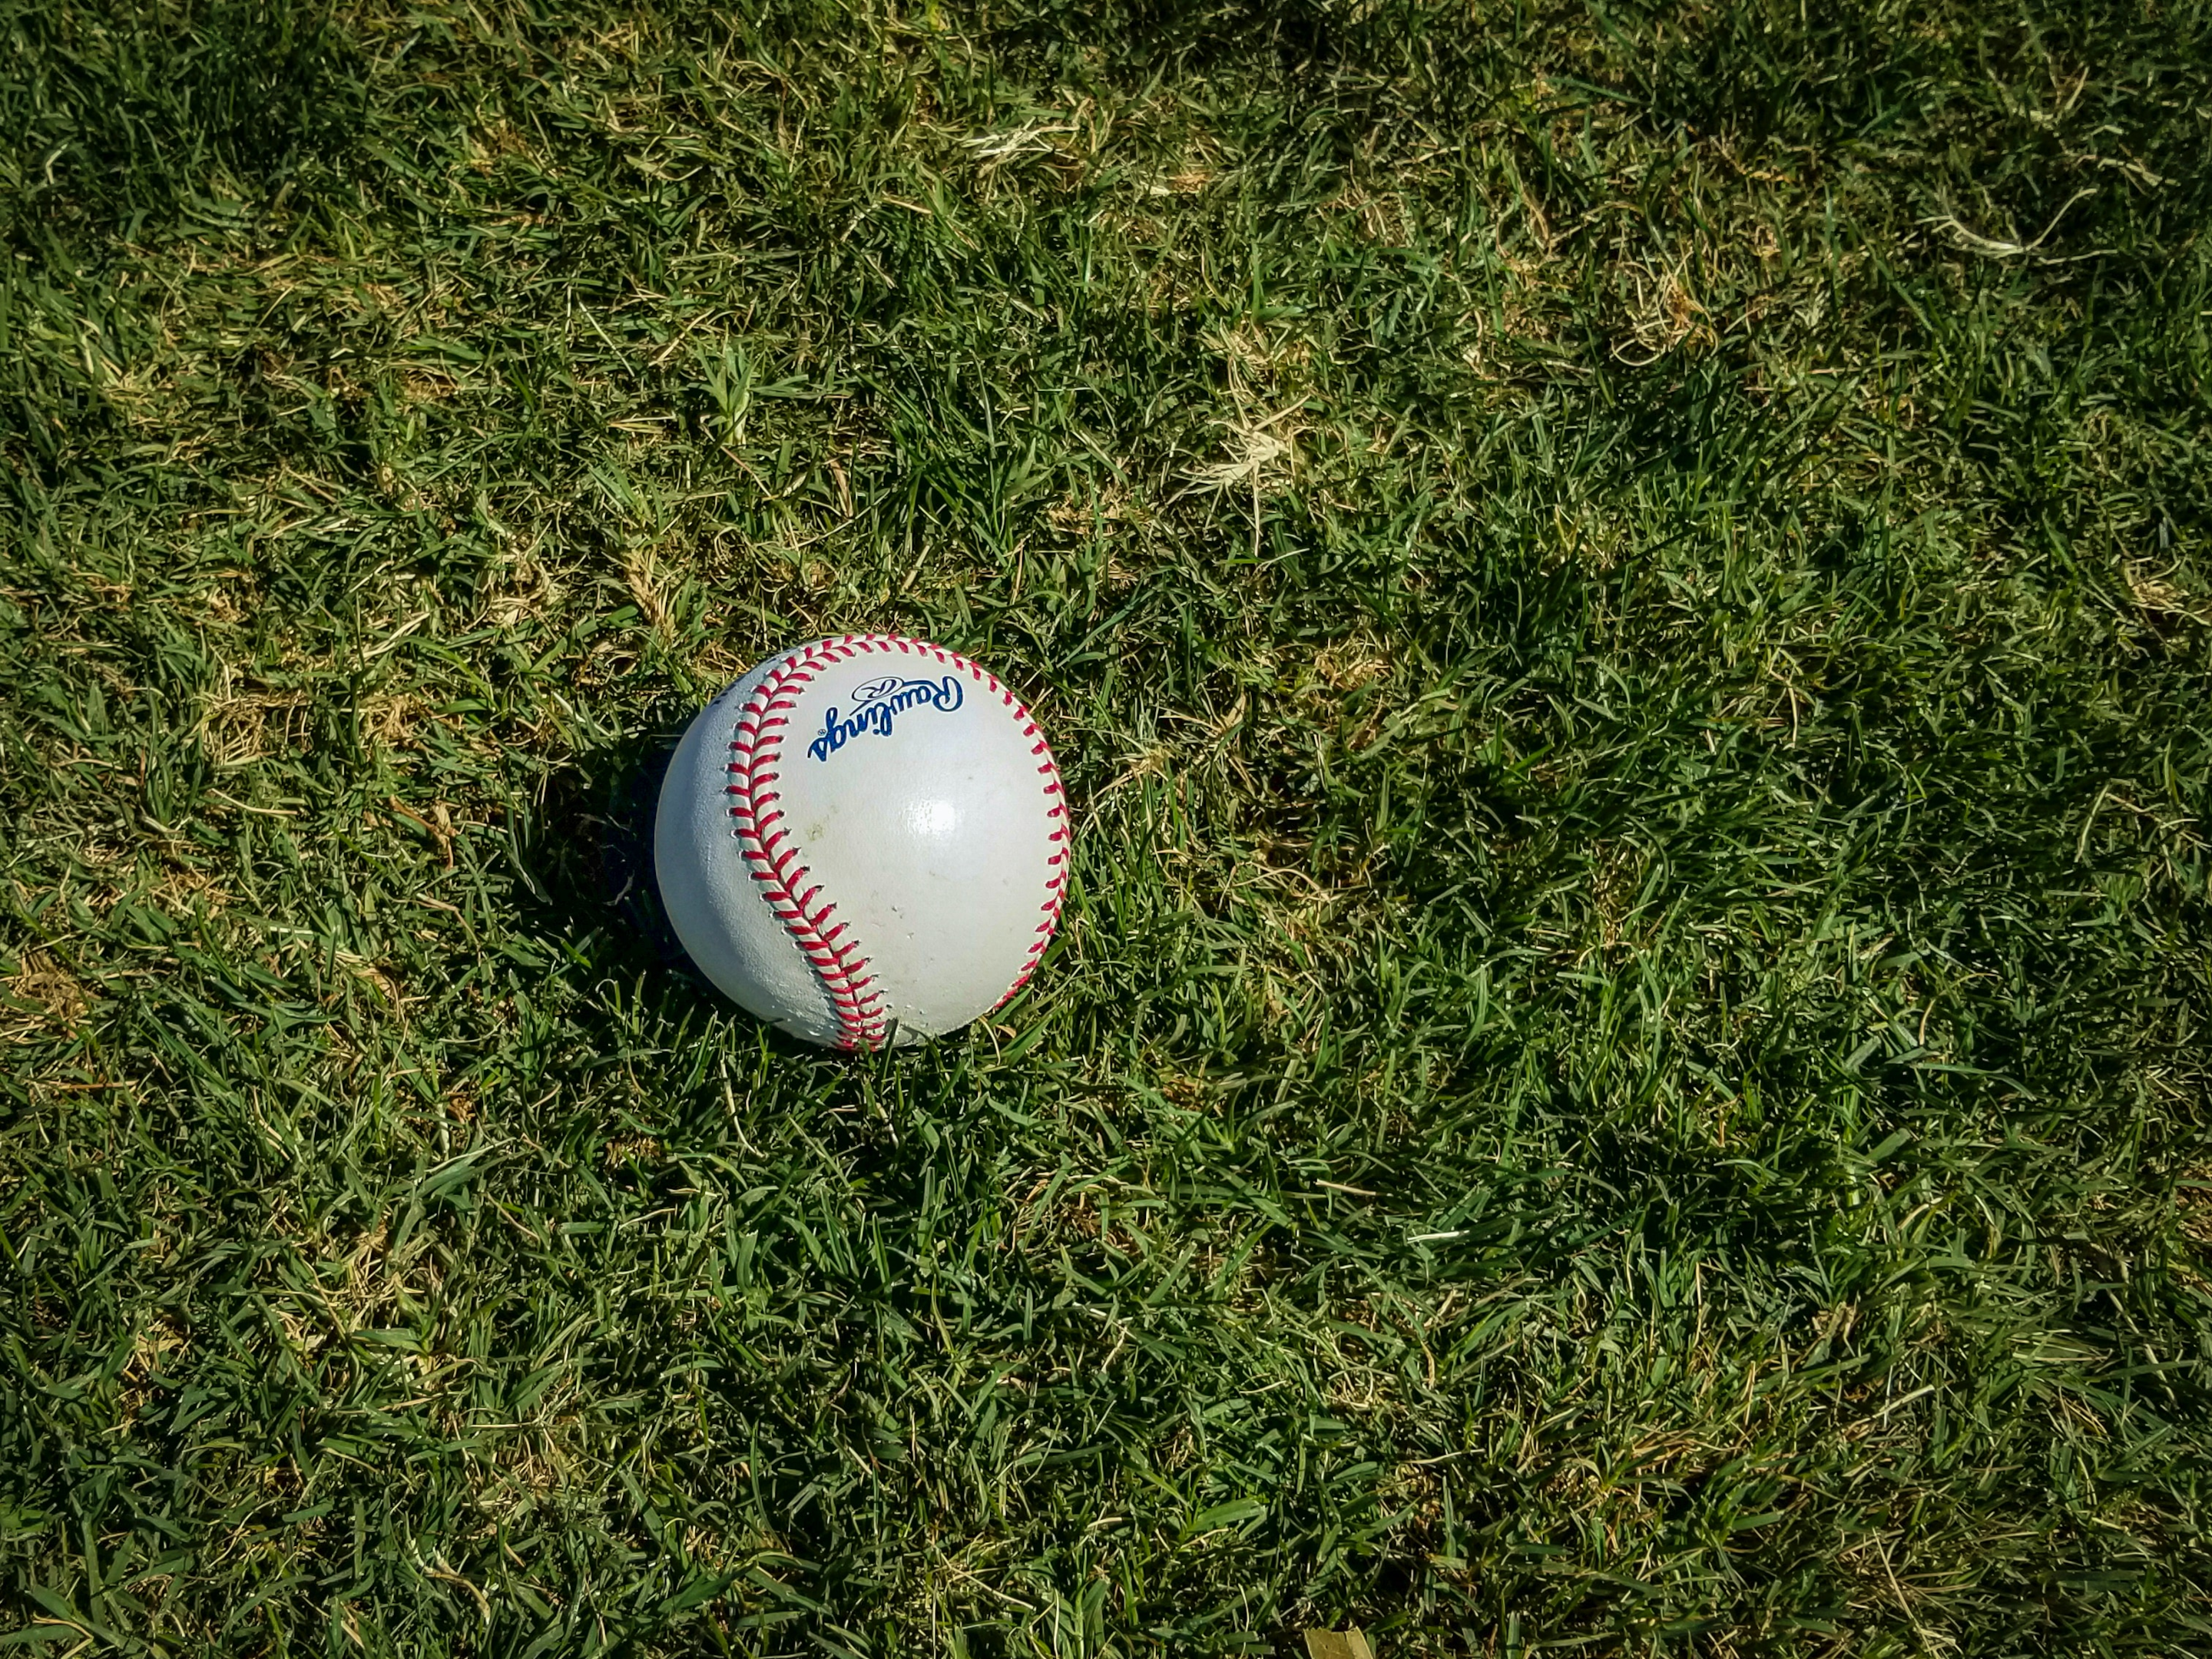 A baseball on a field